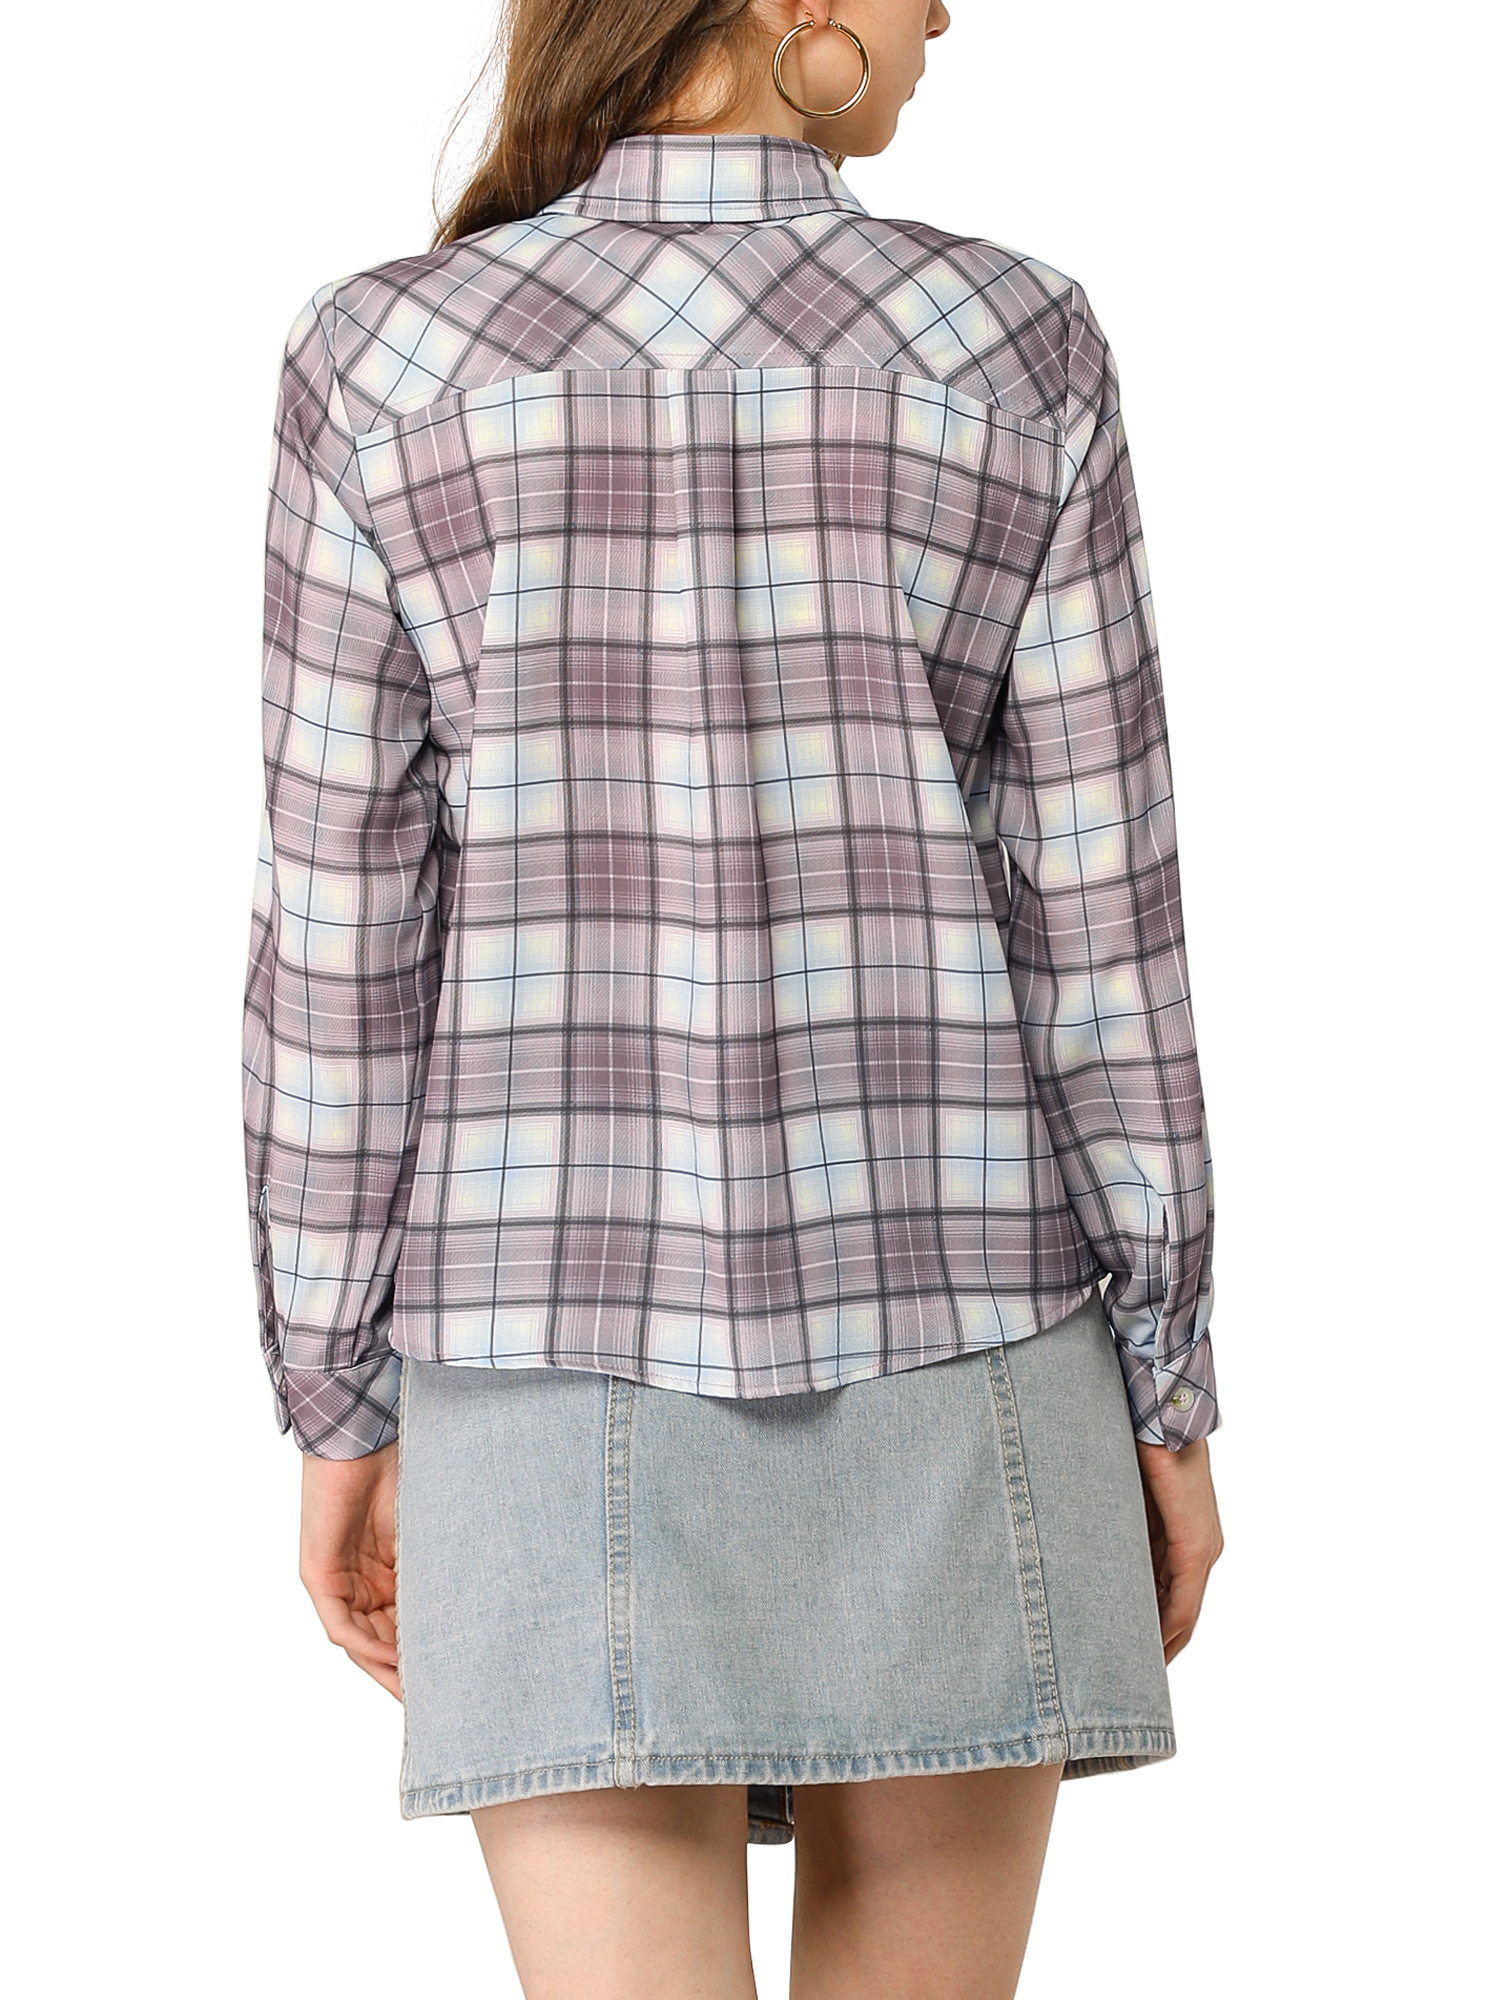 MODA NOVA Junior's Plaid Long Sleeves Button Up Shirt Purple S - image 4 of 7